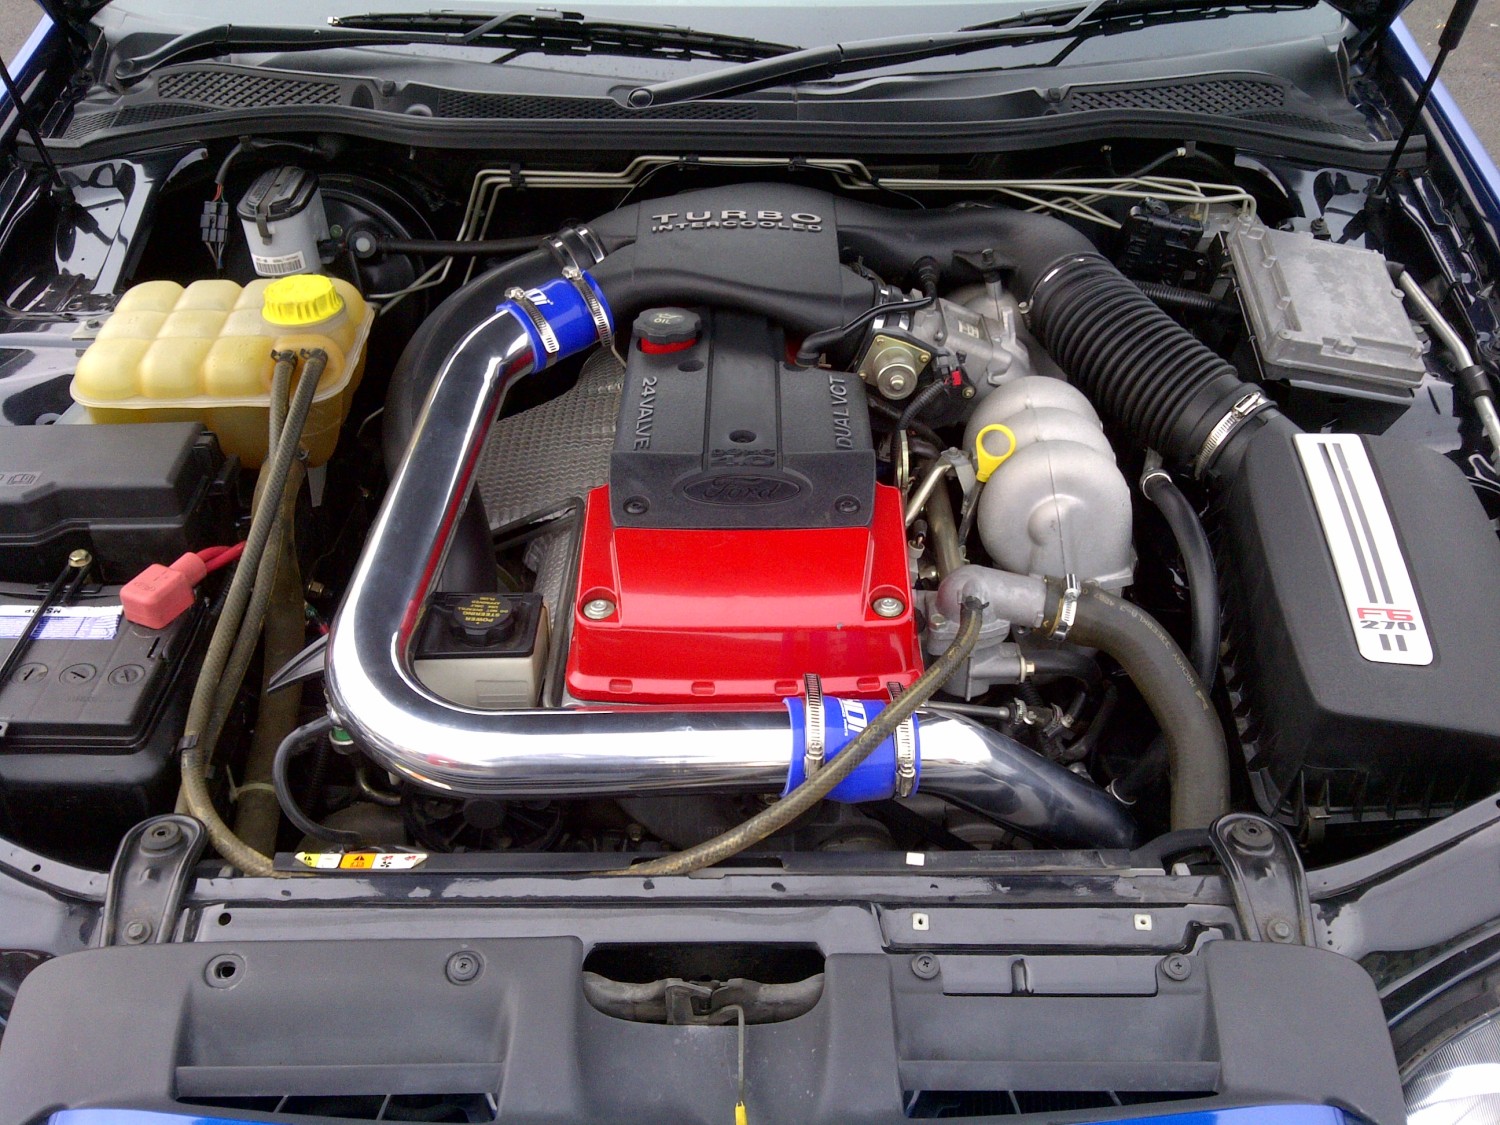 2005 Ford XR6 Turbo